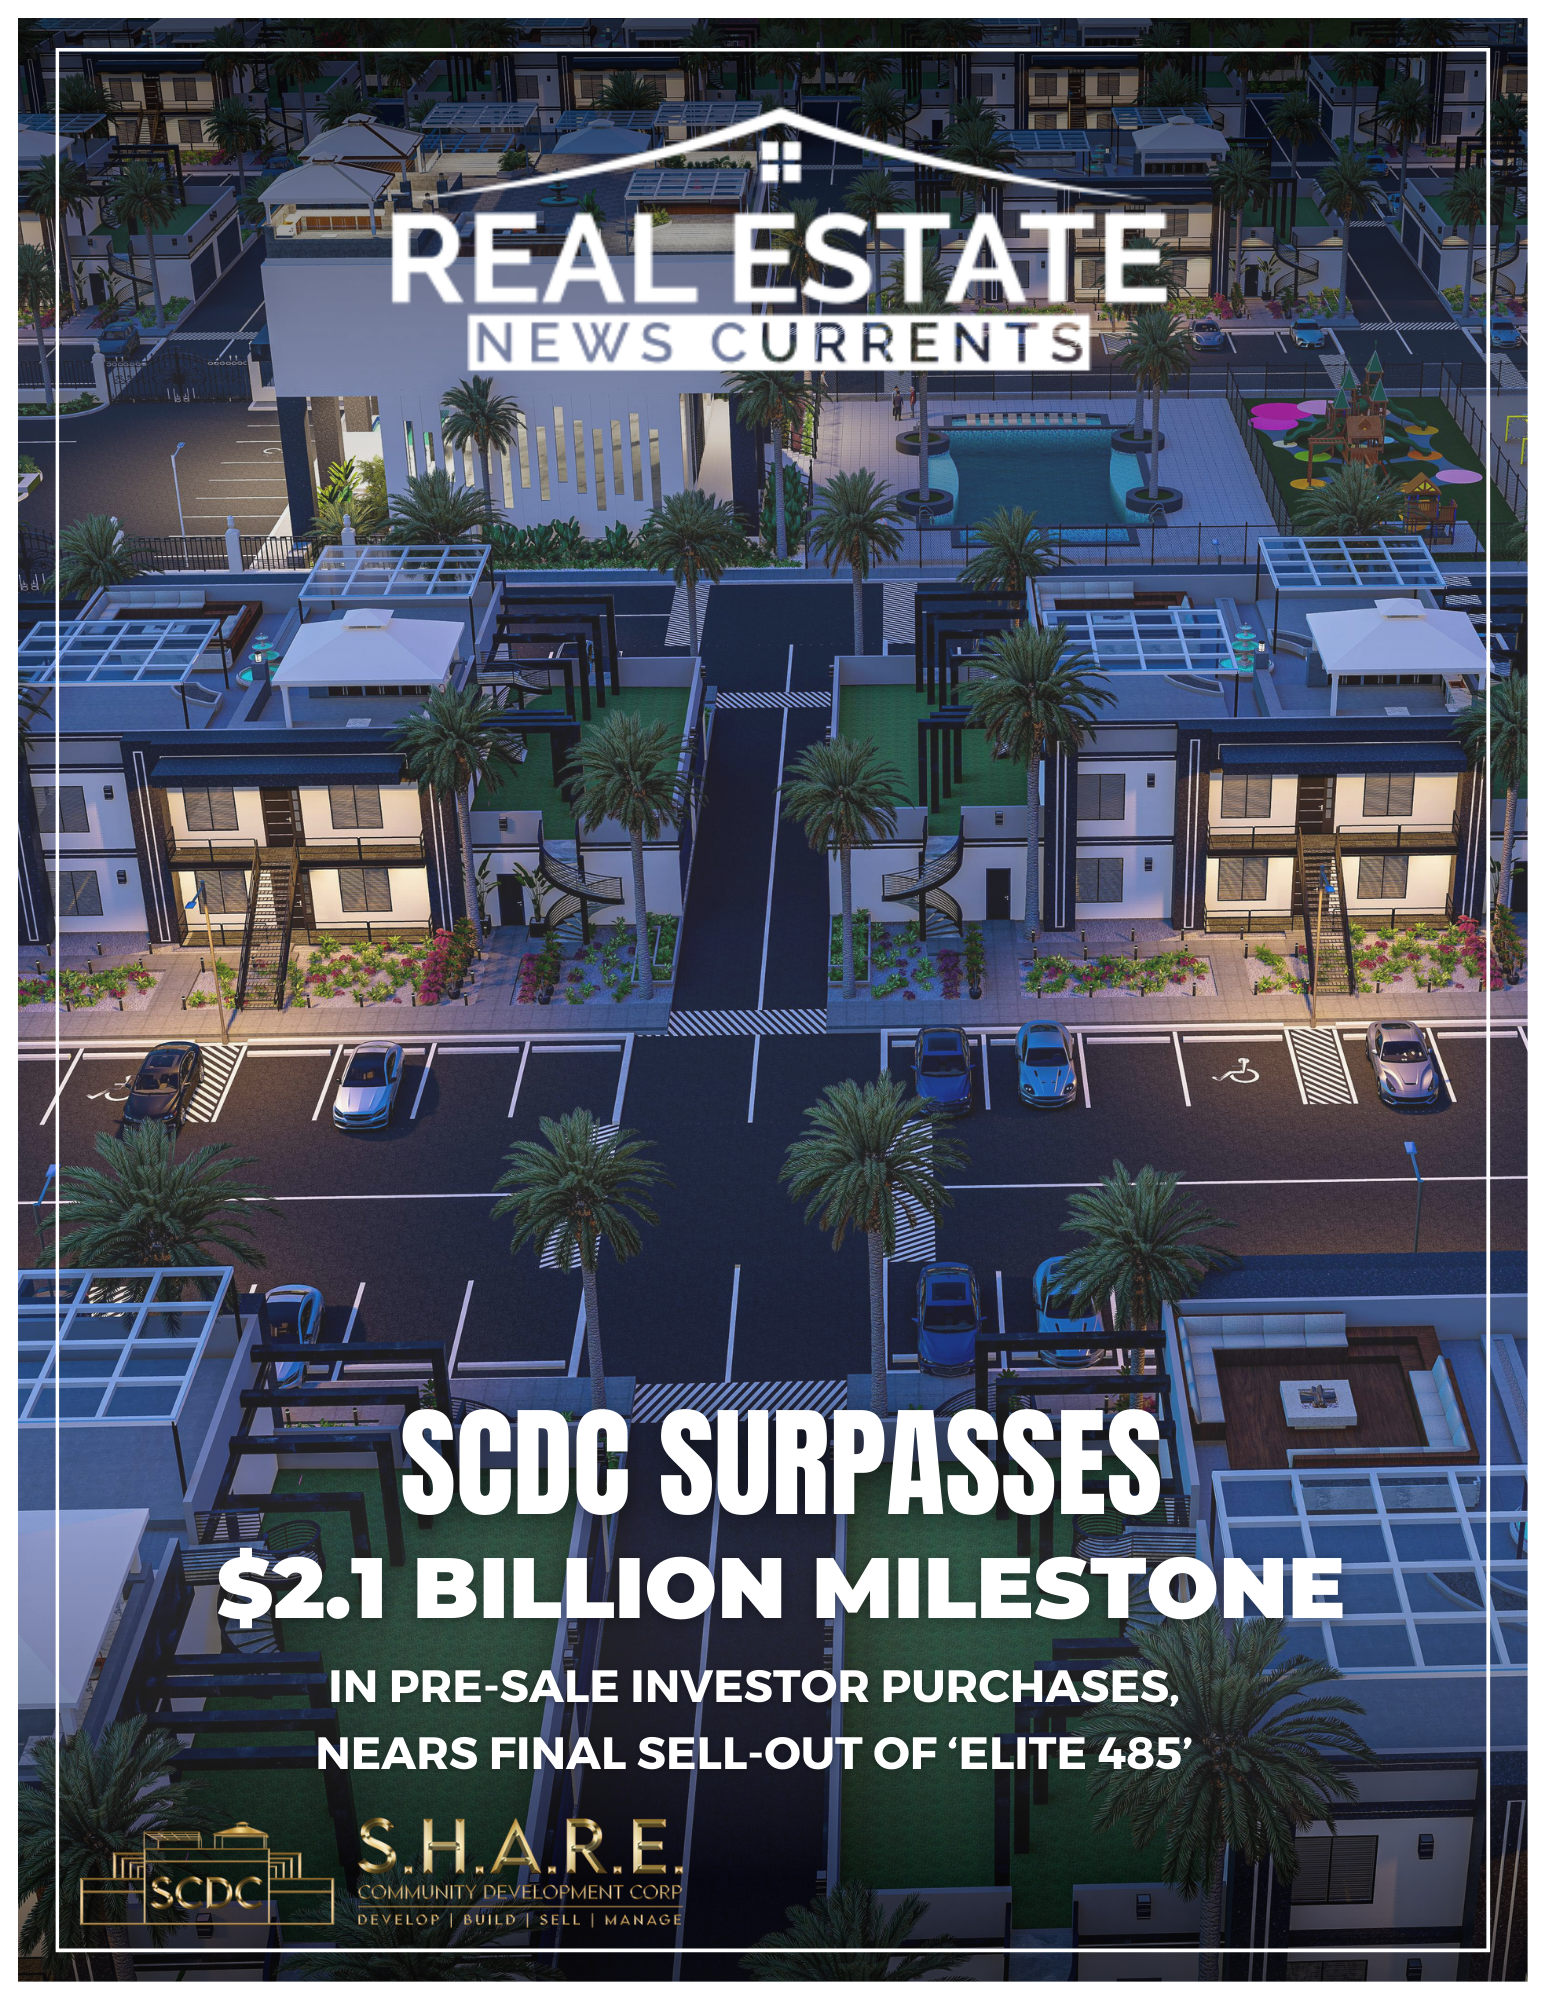 SCDC Surpasses $2.1 Billion Milestone in Pre-Sale Investor Purchases, Nears Final Sell-Out of 'Elite 485'